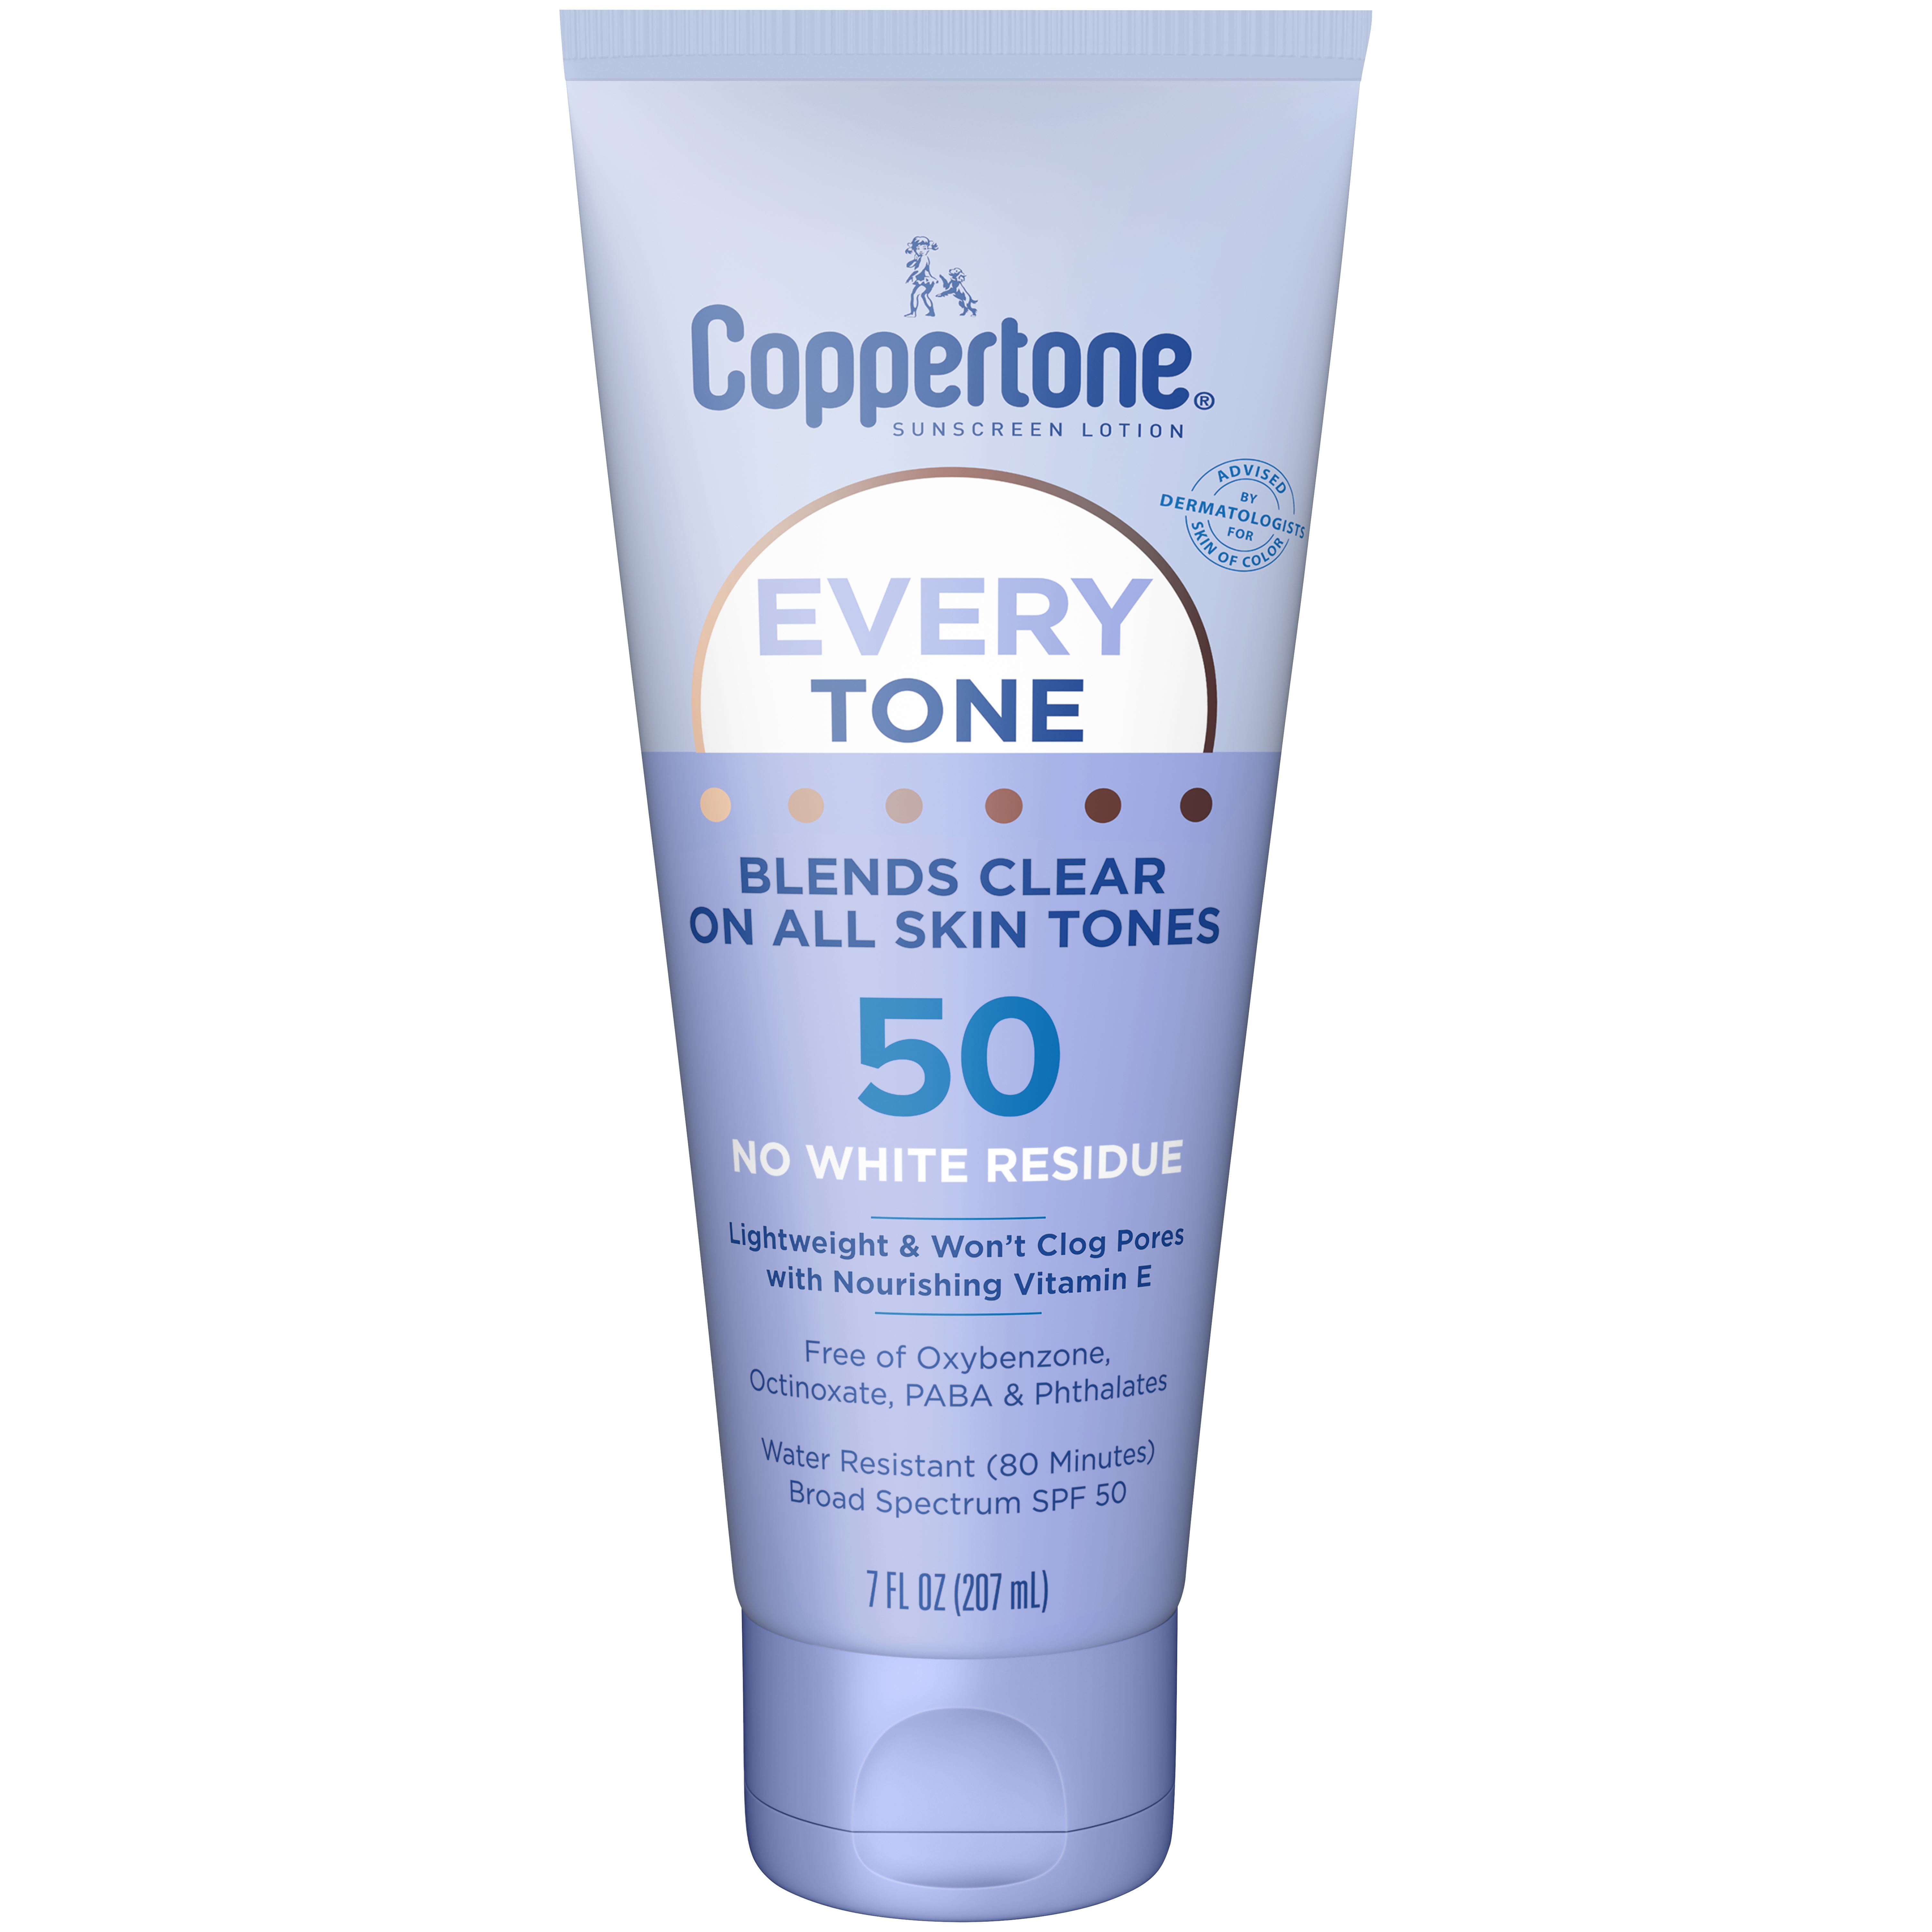 Every Tone SPF 50 Sunscreen Lotion